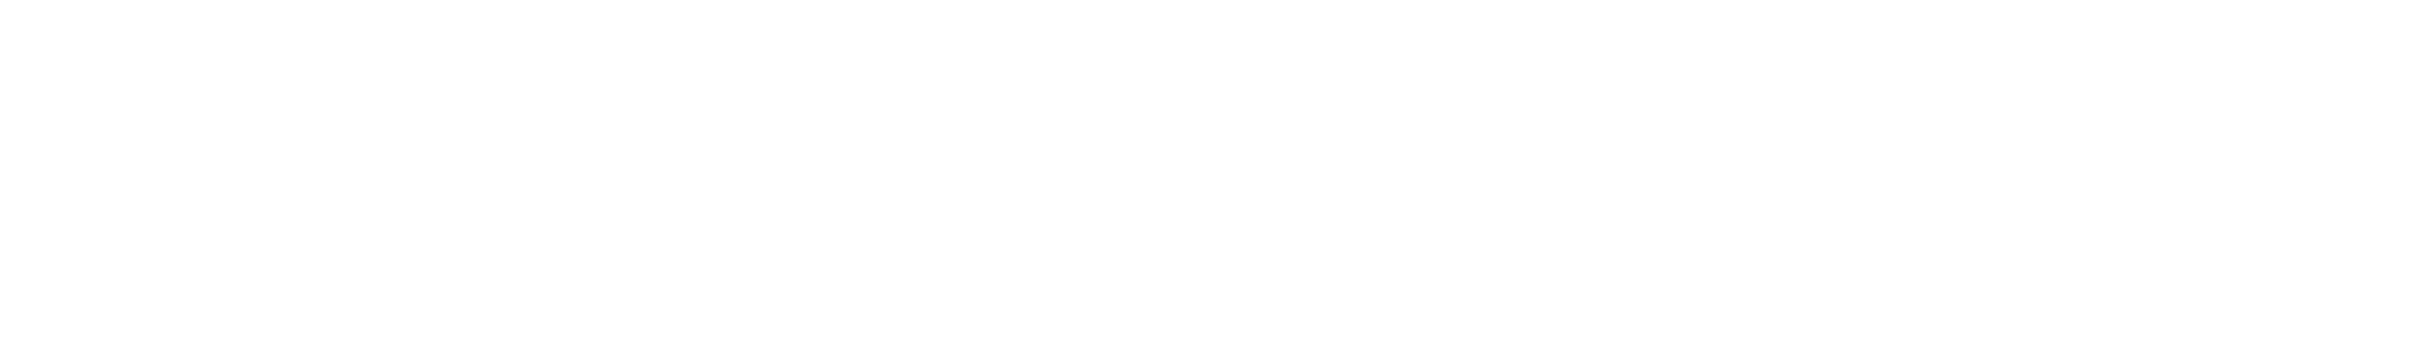 Mississippi State University - The Graduate School